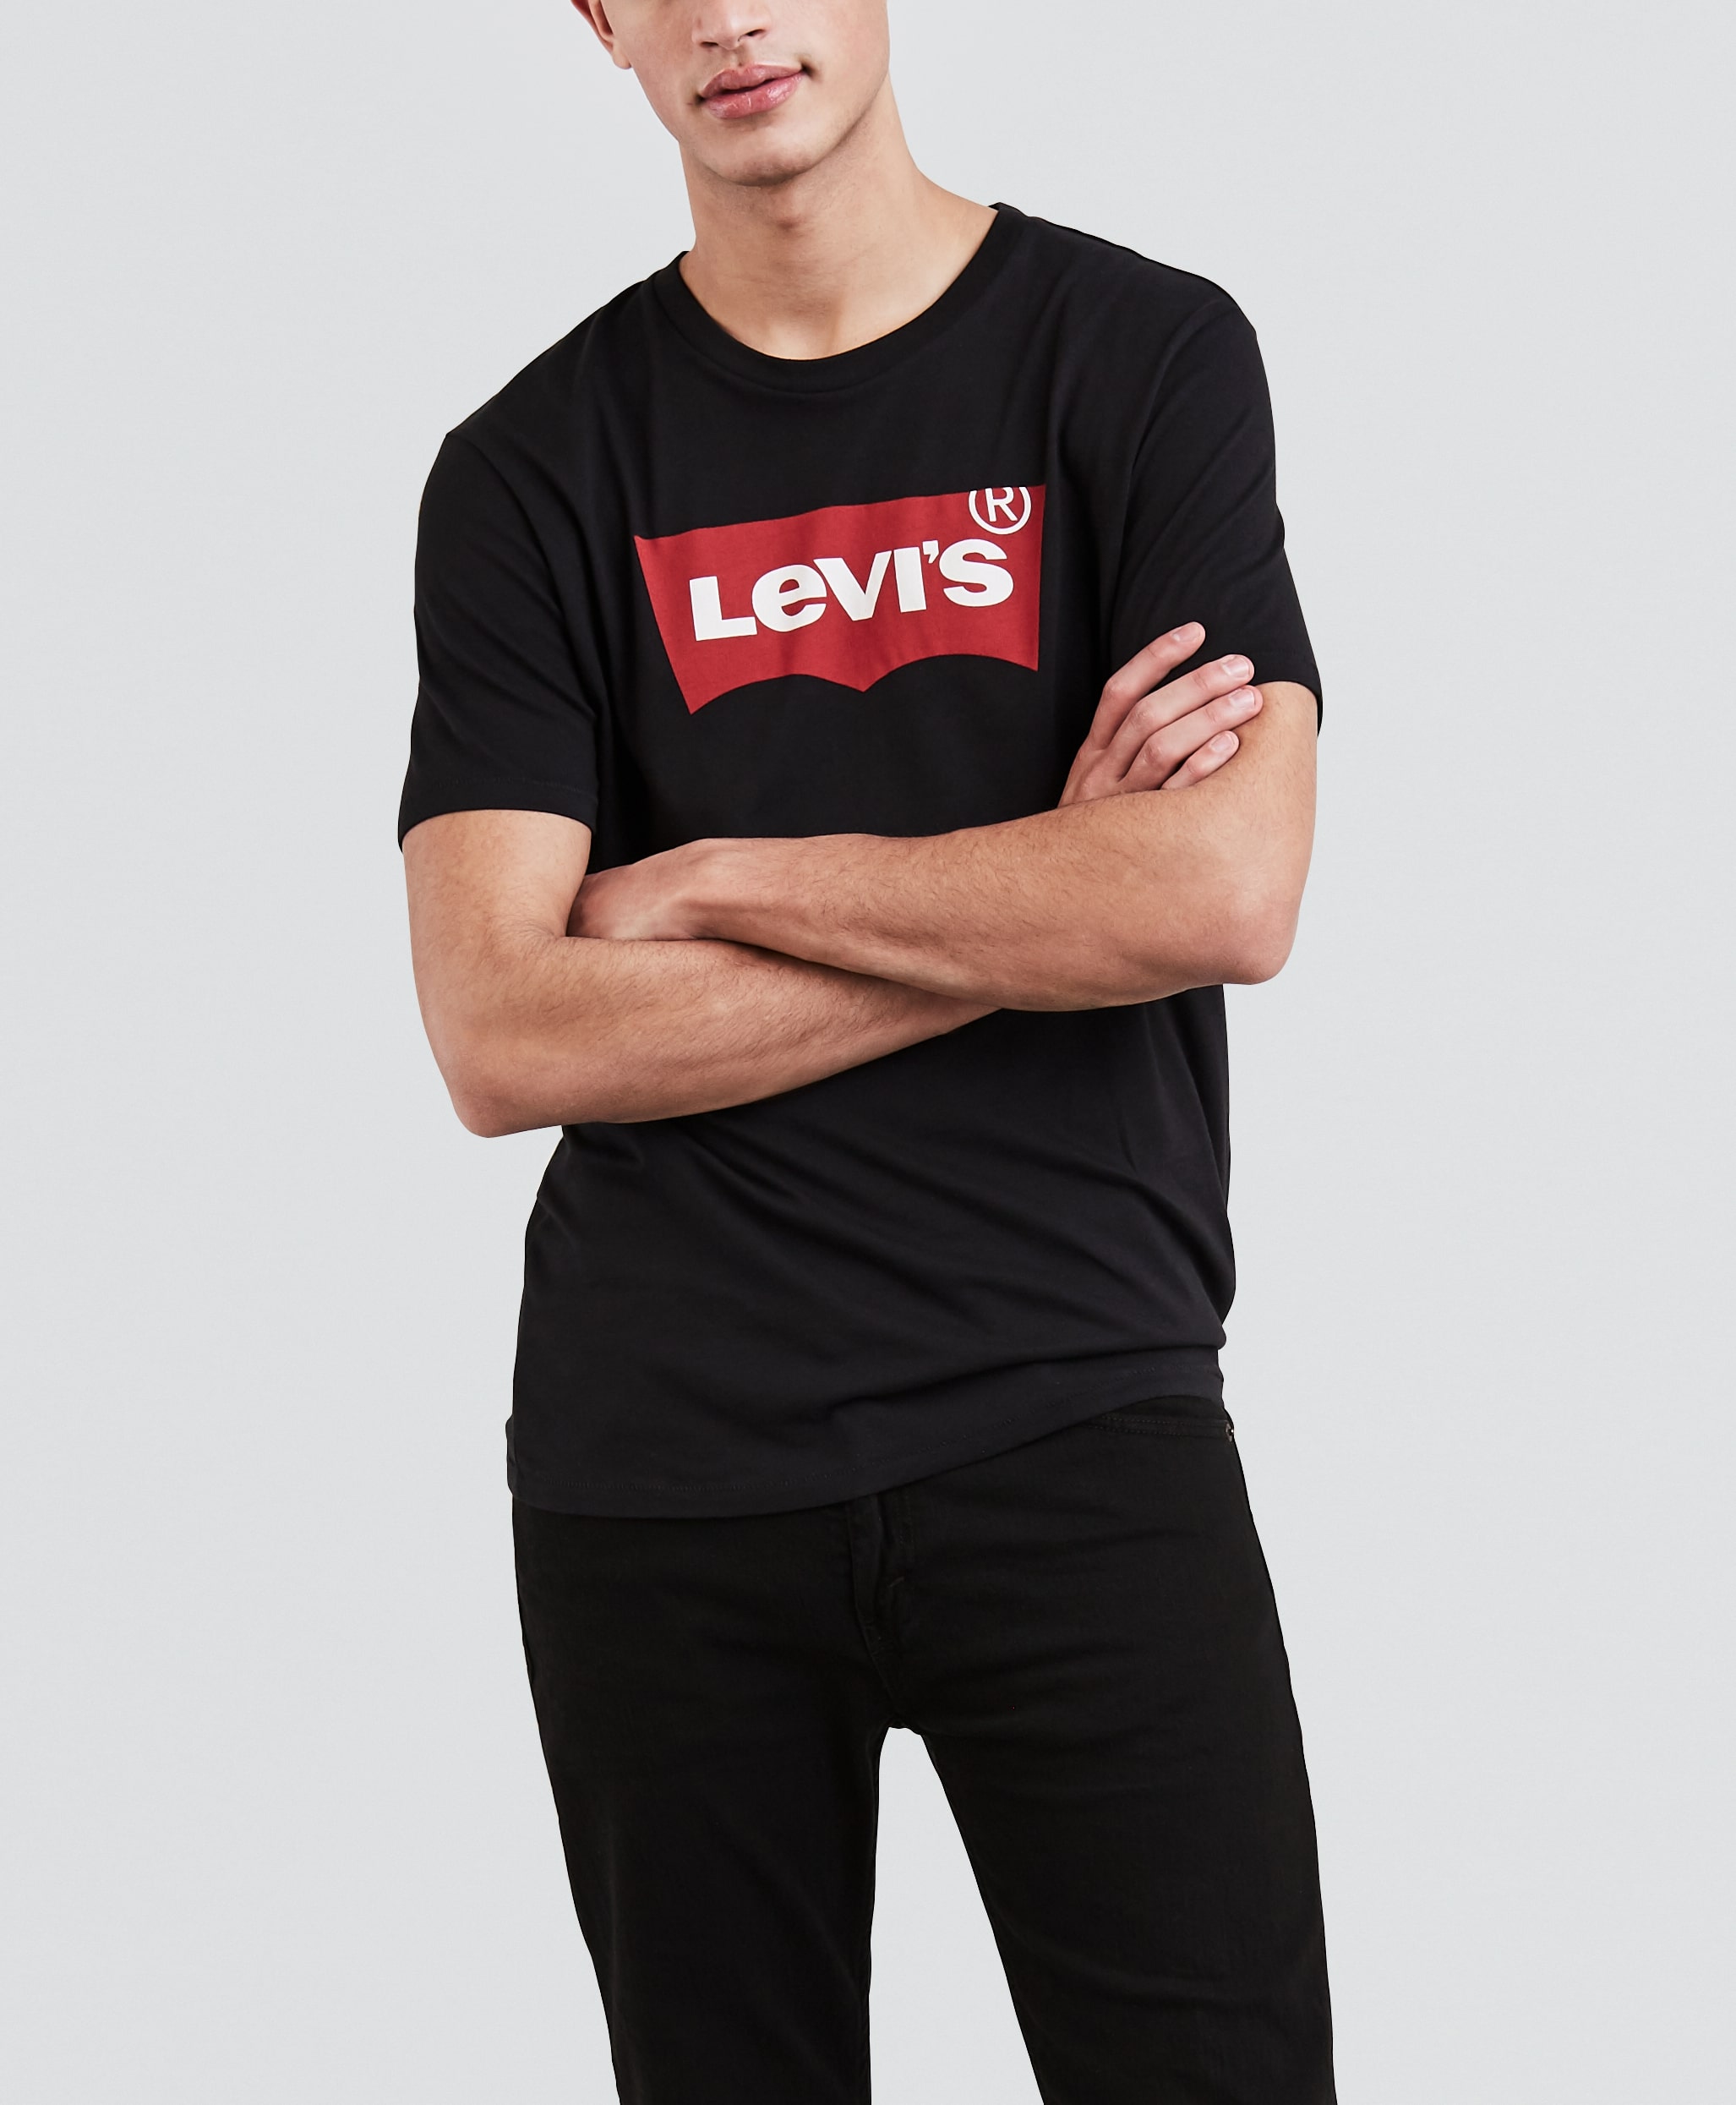 Купить футболку levis. Levis t Shirt Mens. Футболки Levi’s ориг. Levis футболка мужская. Levis черная муж футболка.